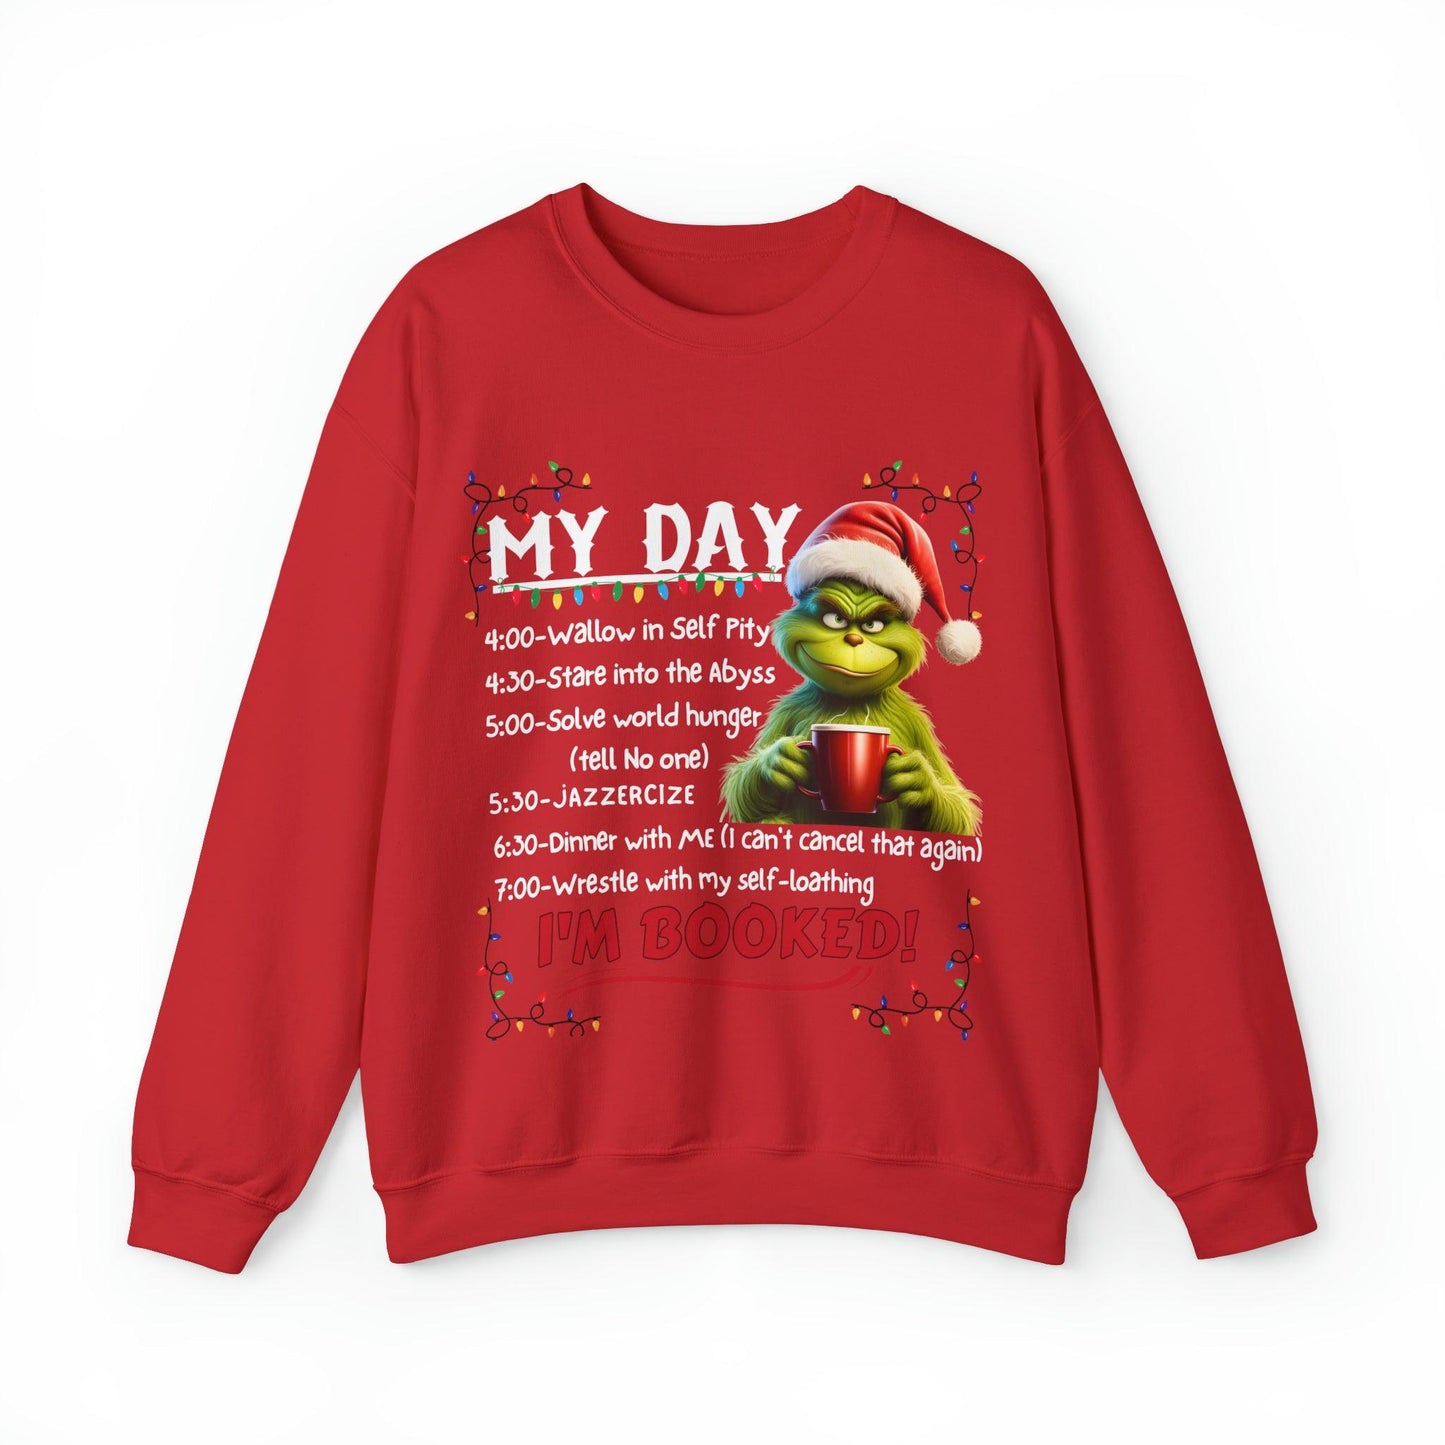 My Day Schedule I'M Booked Sweatshirt Funny Christmas Sweatshirt Christmas grinch Sweatshirt Christmas Sweater Christmas Trendy Christmas Sweatshirt - Giftsmojo